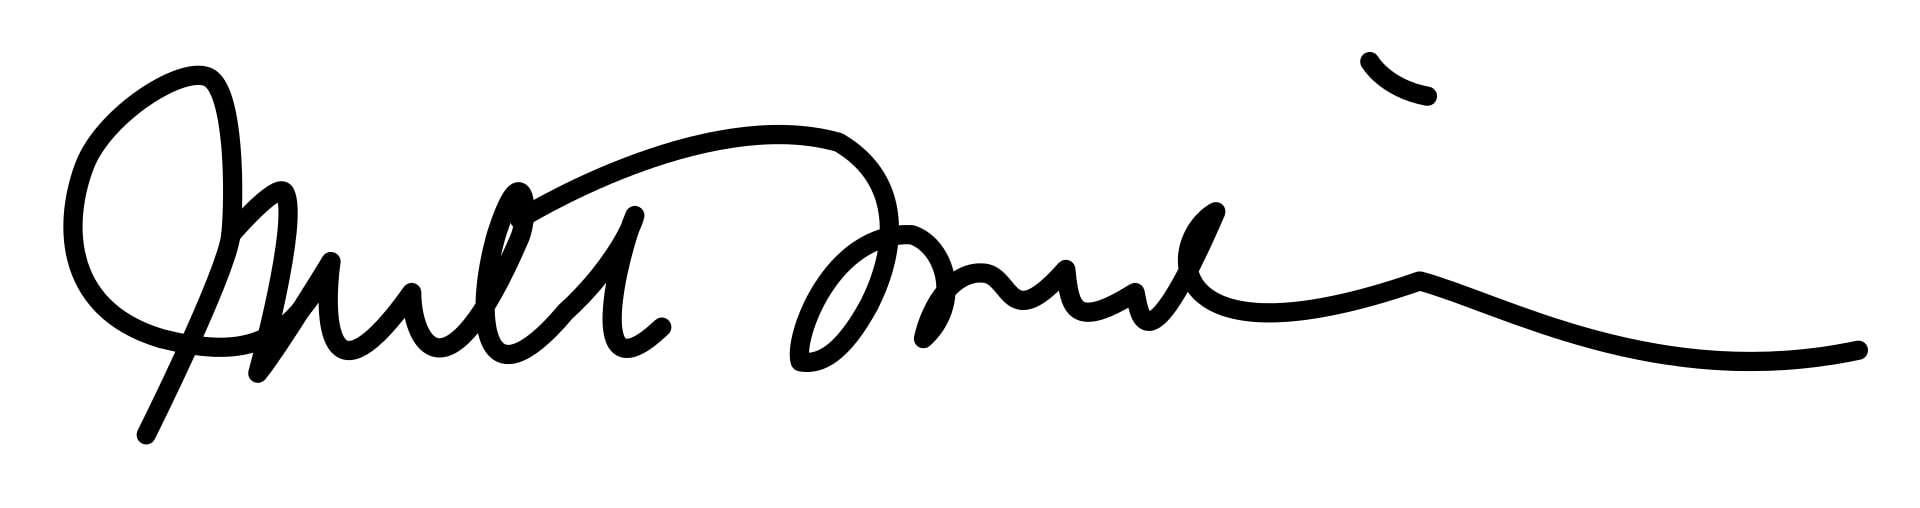 Milton Friedman Signature